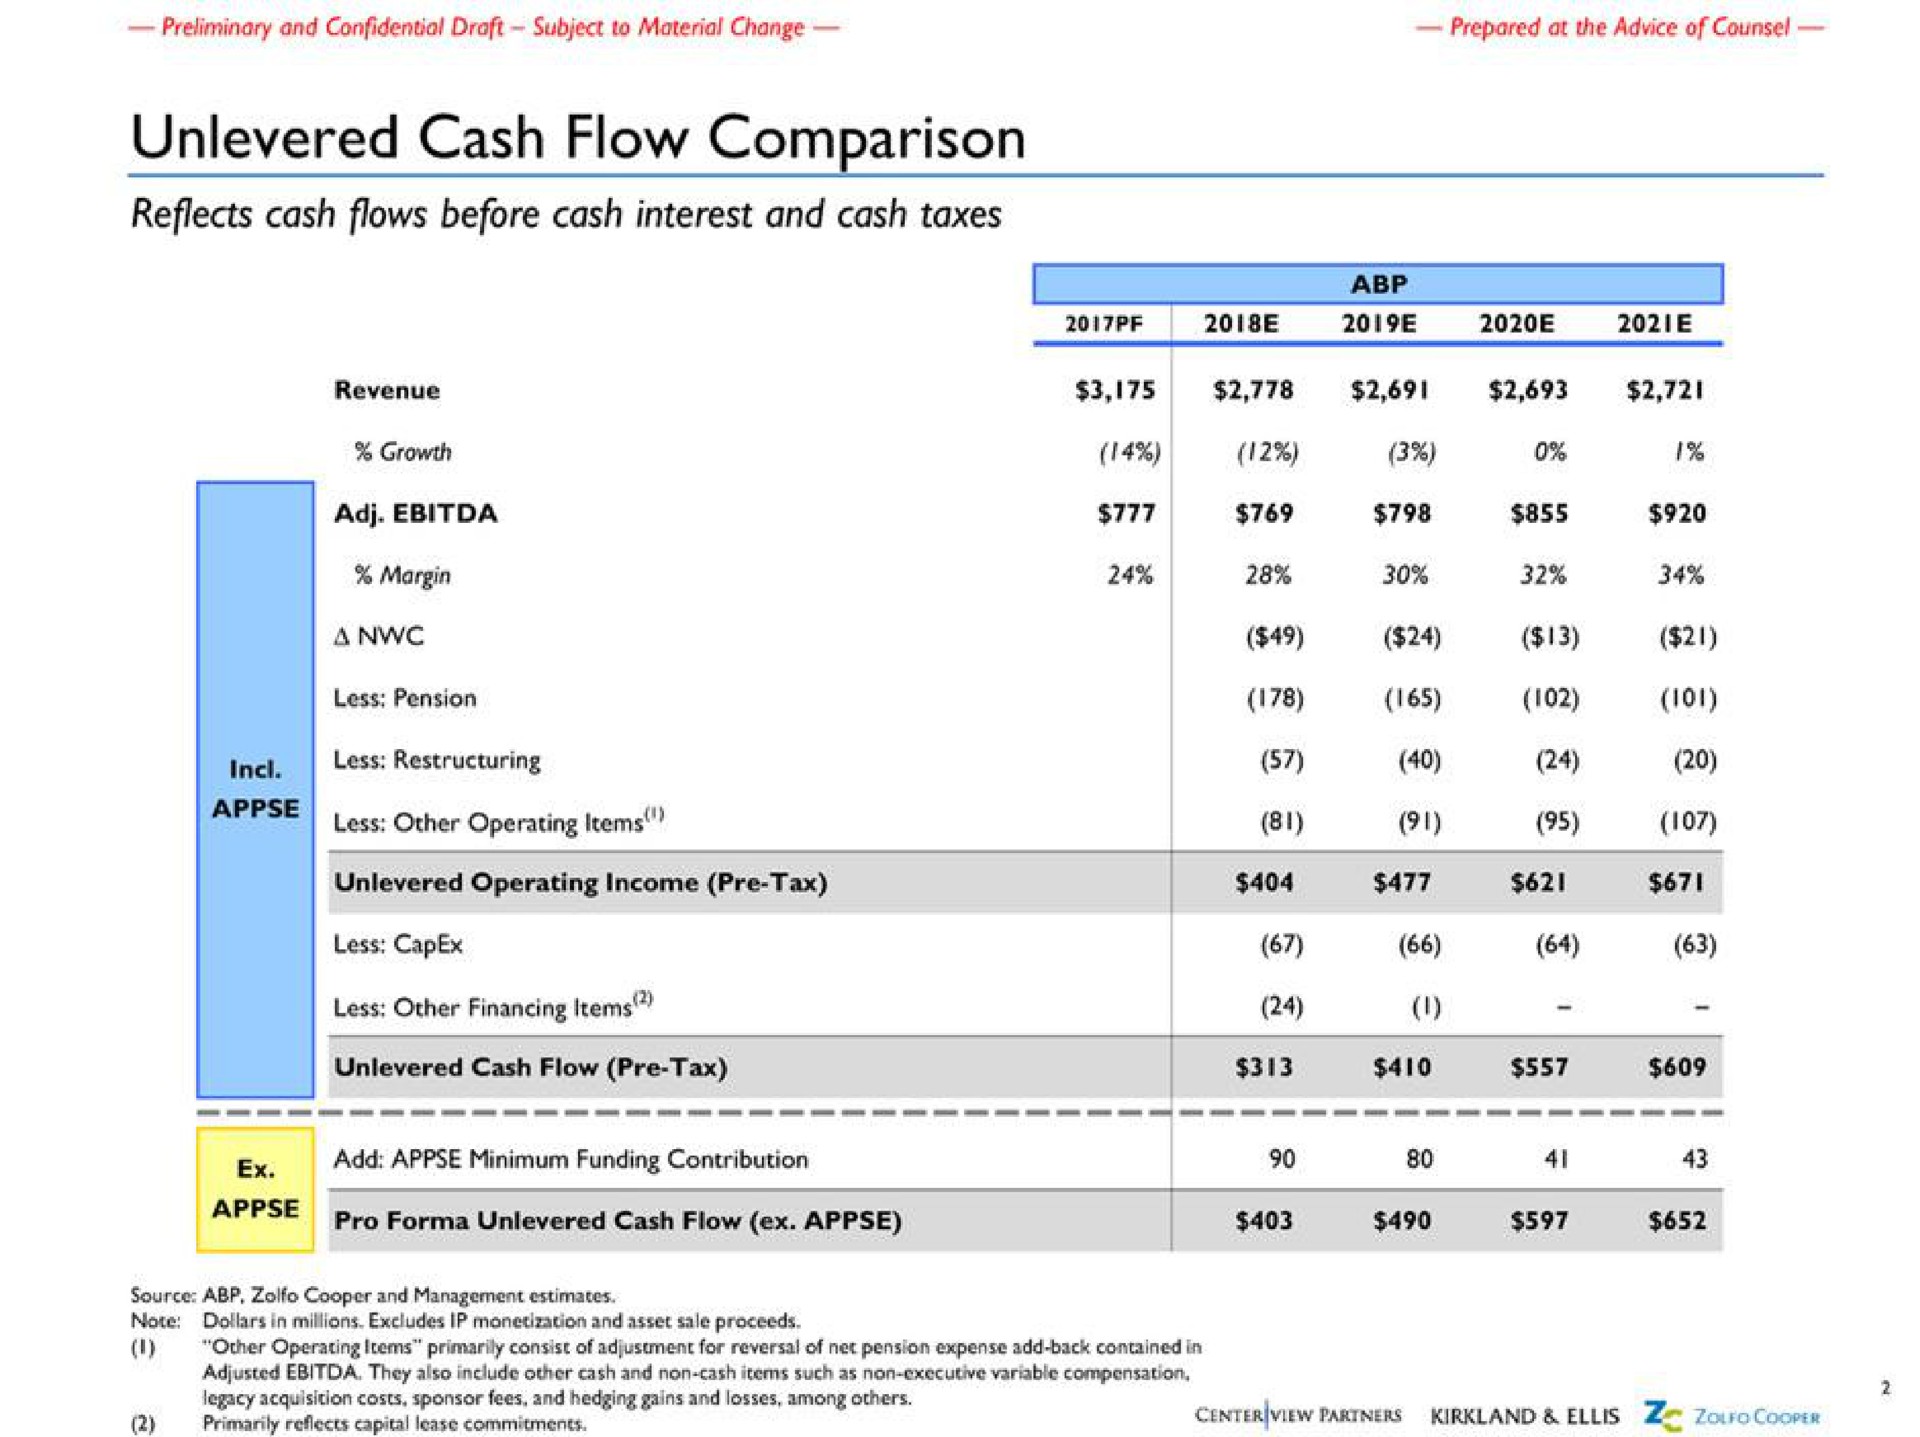 cash flow comparison reflects cash flows before cash interest and cash taxes less pension less other financing items us add minimum funding contribution cash flow | Centerview Partners